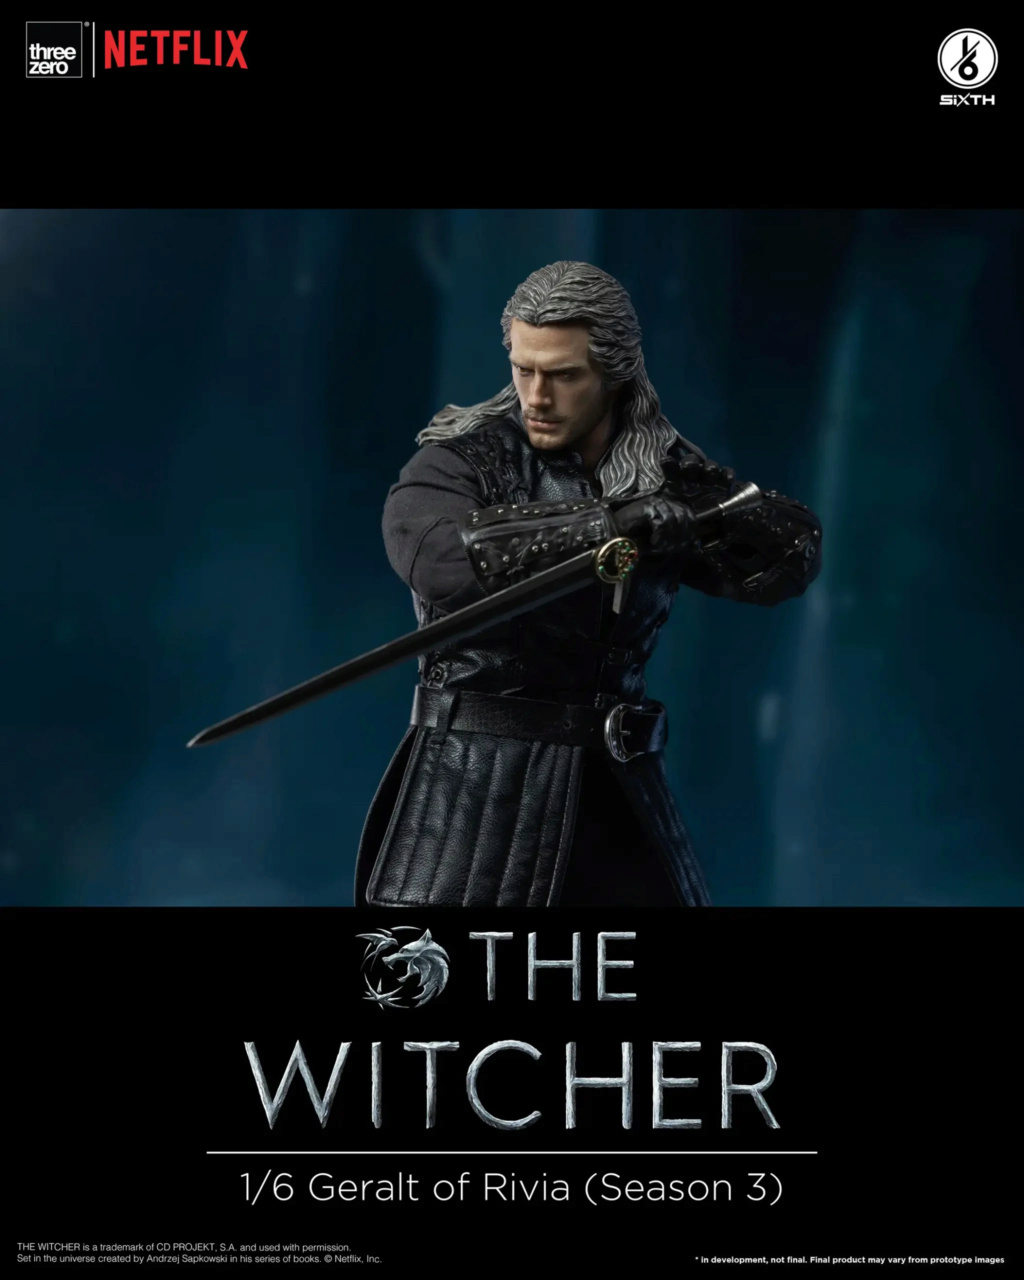 newproduct - NEW PRODUCT: Threezero: The Witcher 1/6 Geralt of Rivia (Season 3) 9_webp18